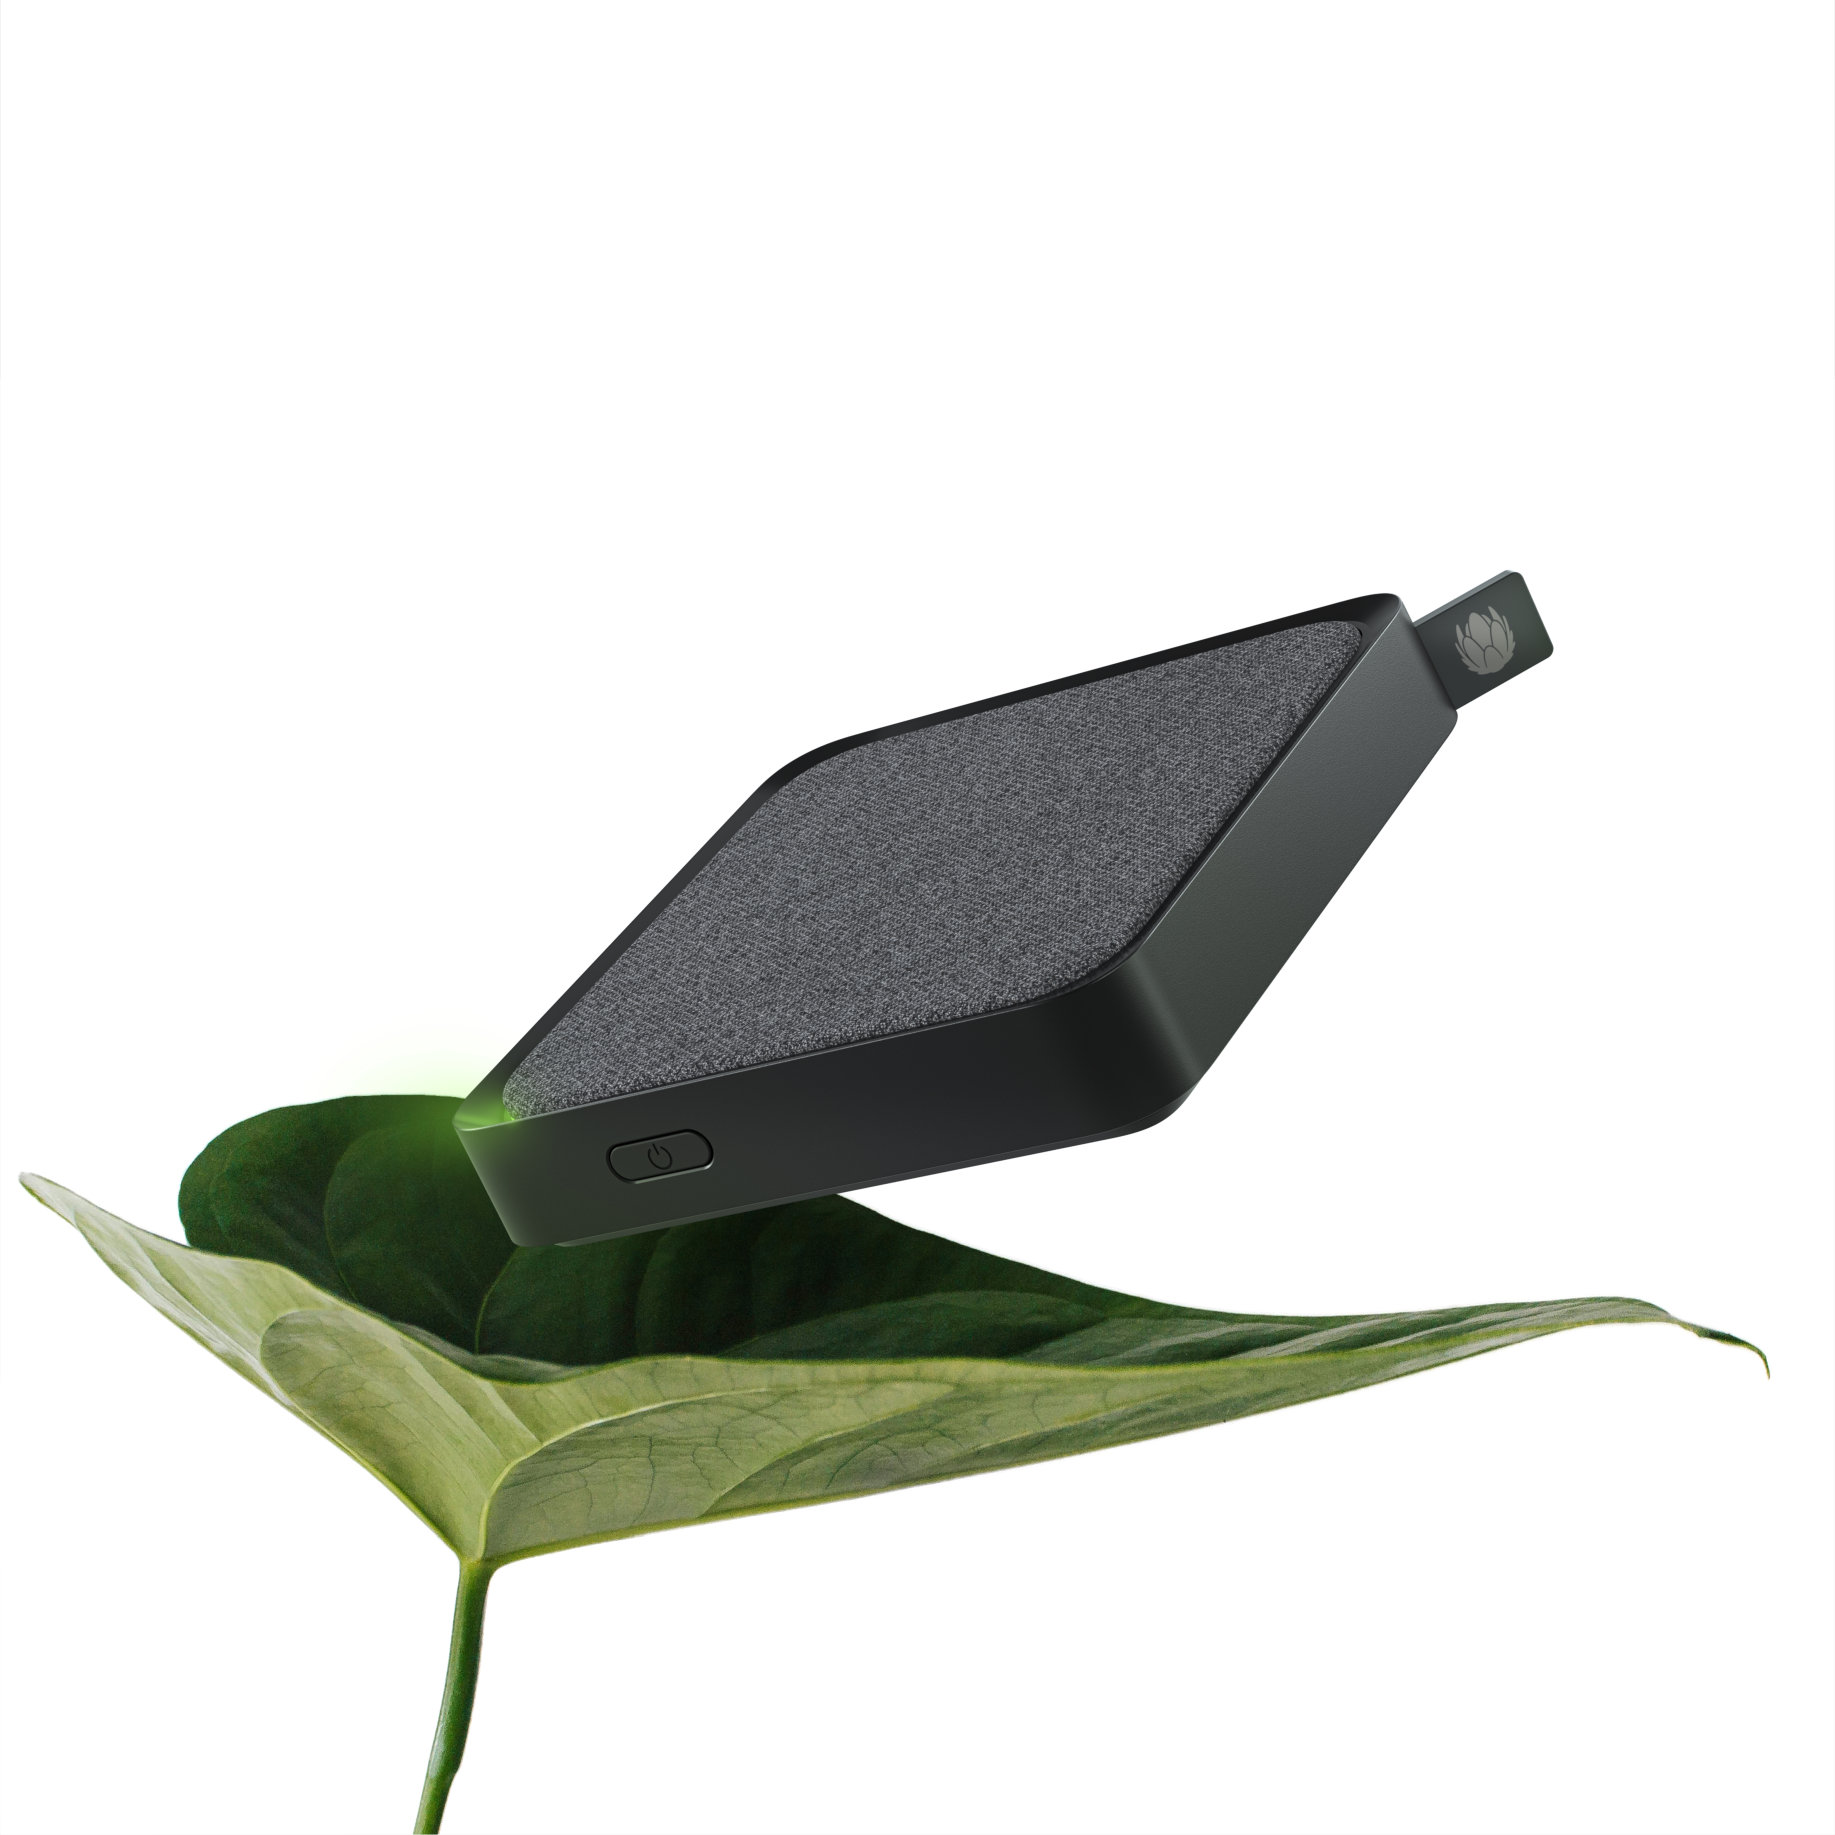 The Mini TV Box - our smallest, greenest set-top-box - Liberty Global